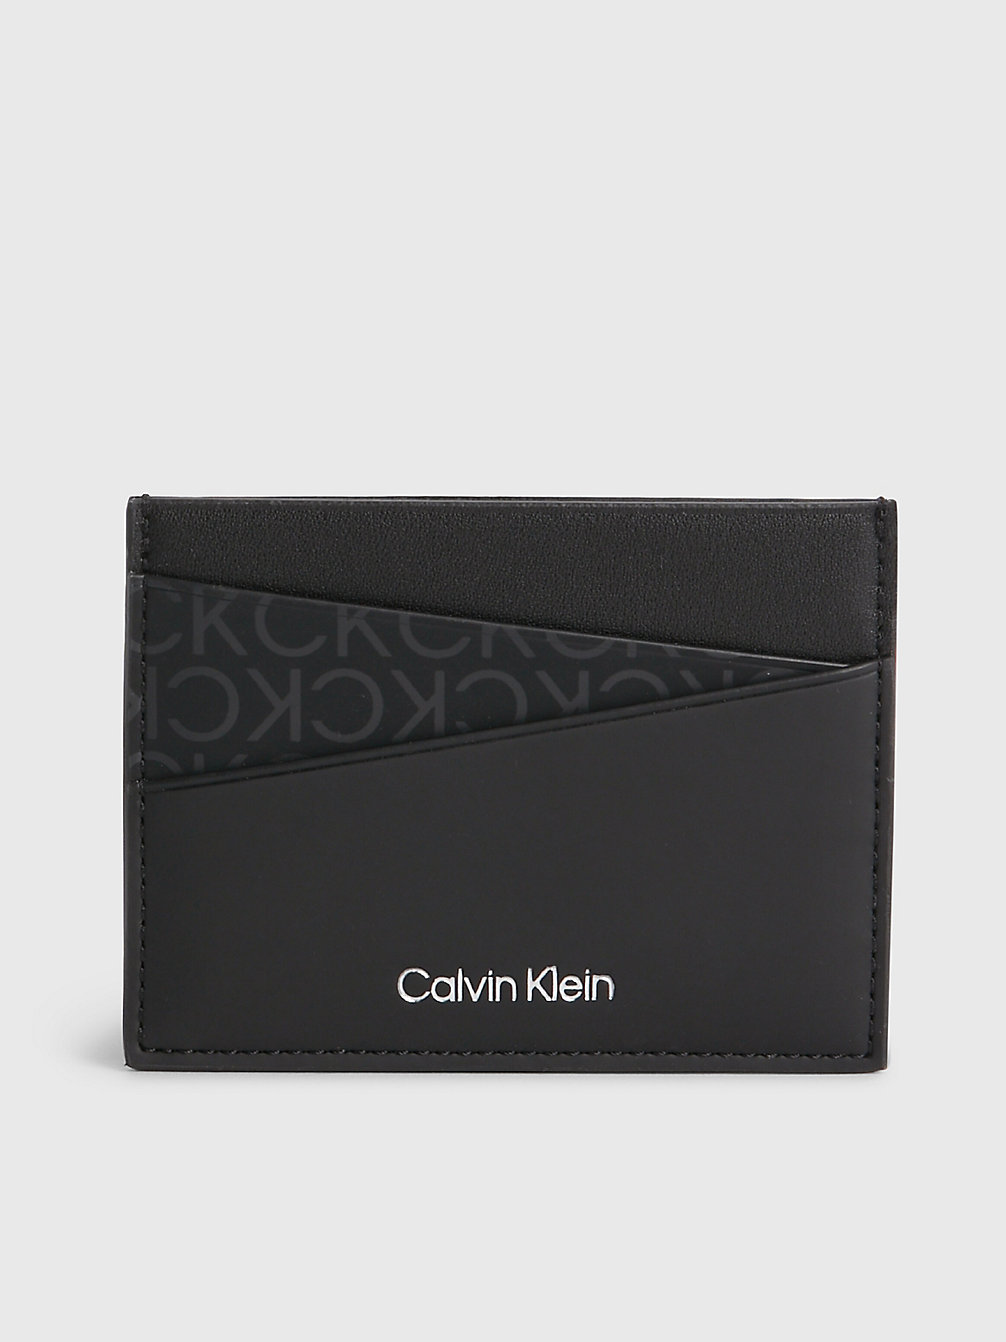 Portacarte In Ecopelle Riciclata > CK BLACK > undefined uomo > Calvin Klein